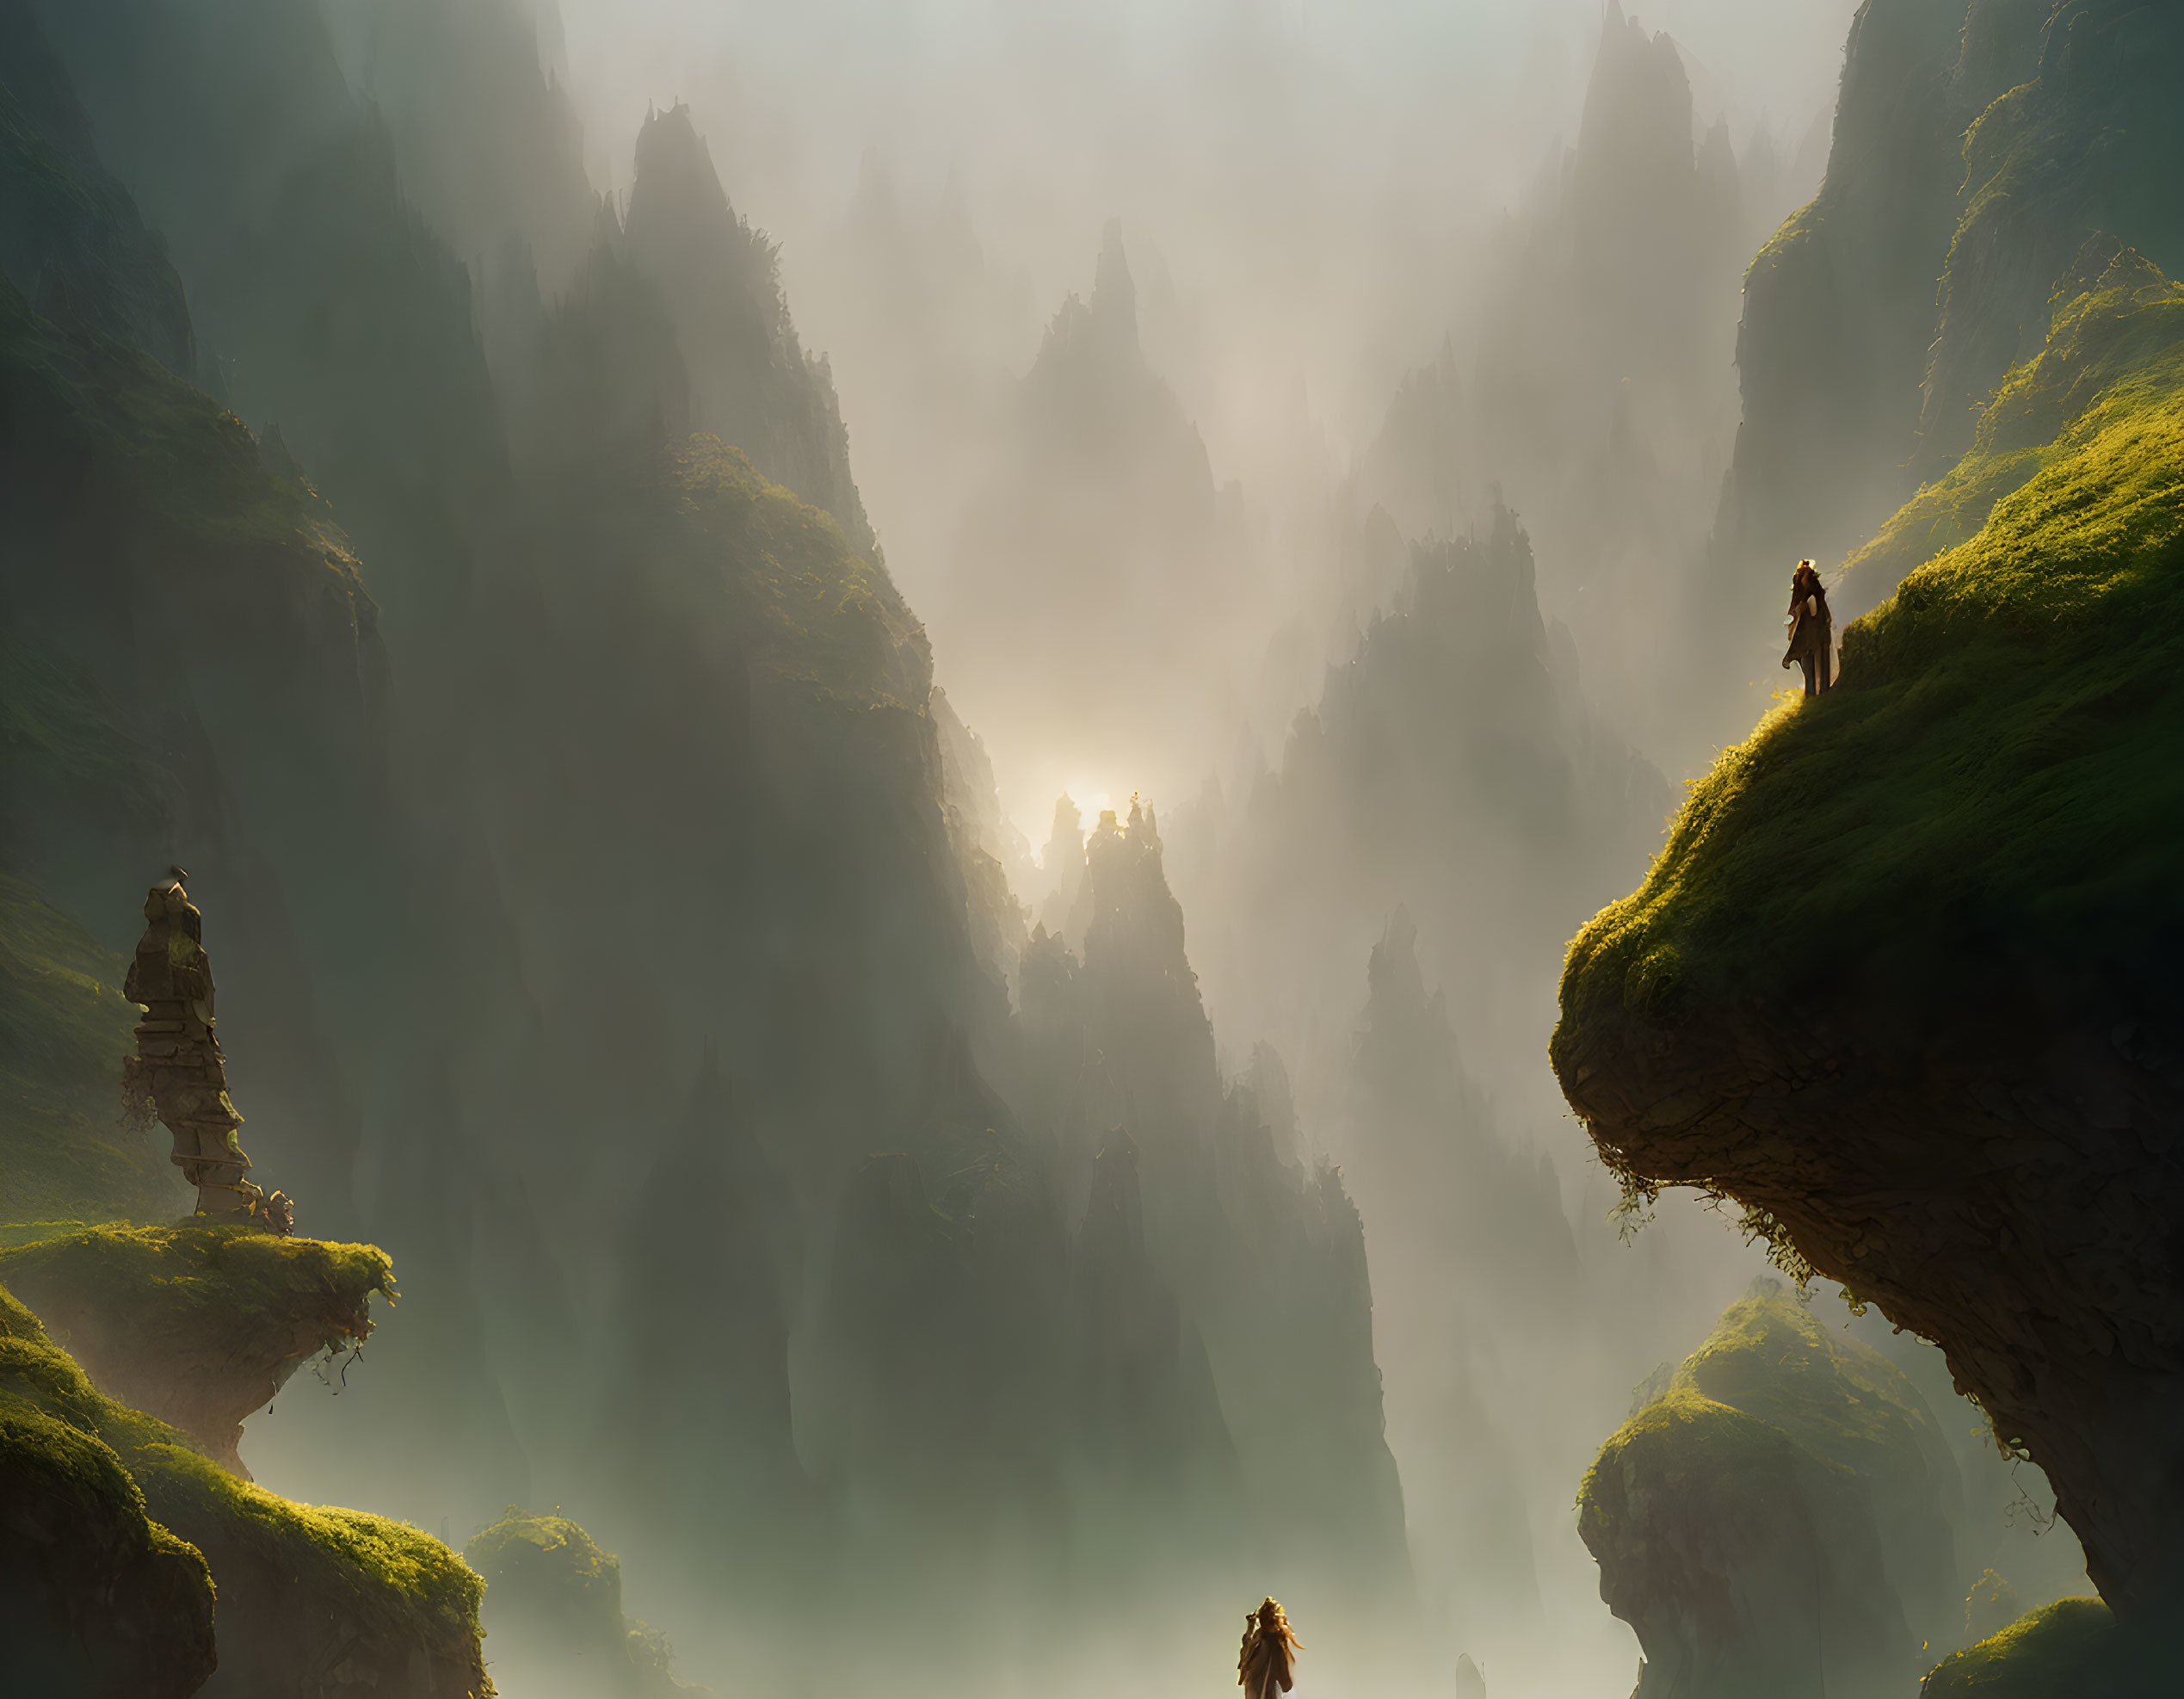 Misty green cliffs and figures in serene landscape